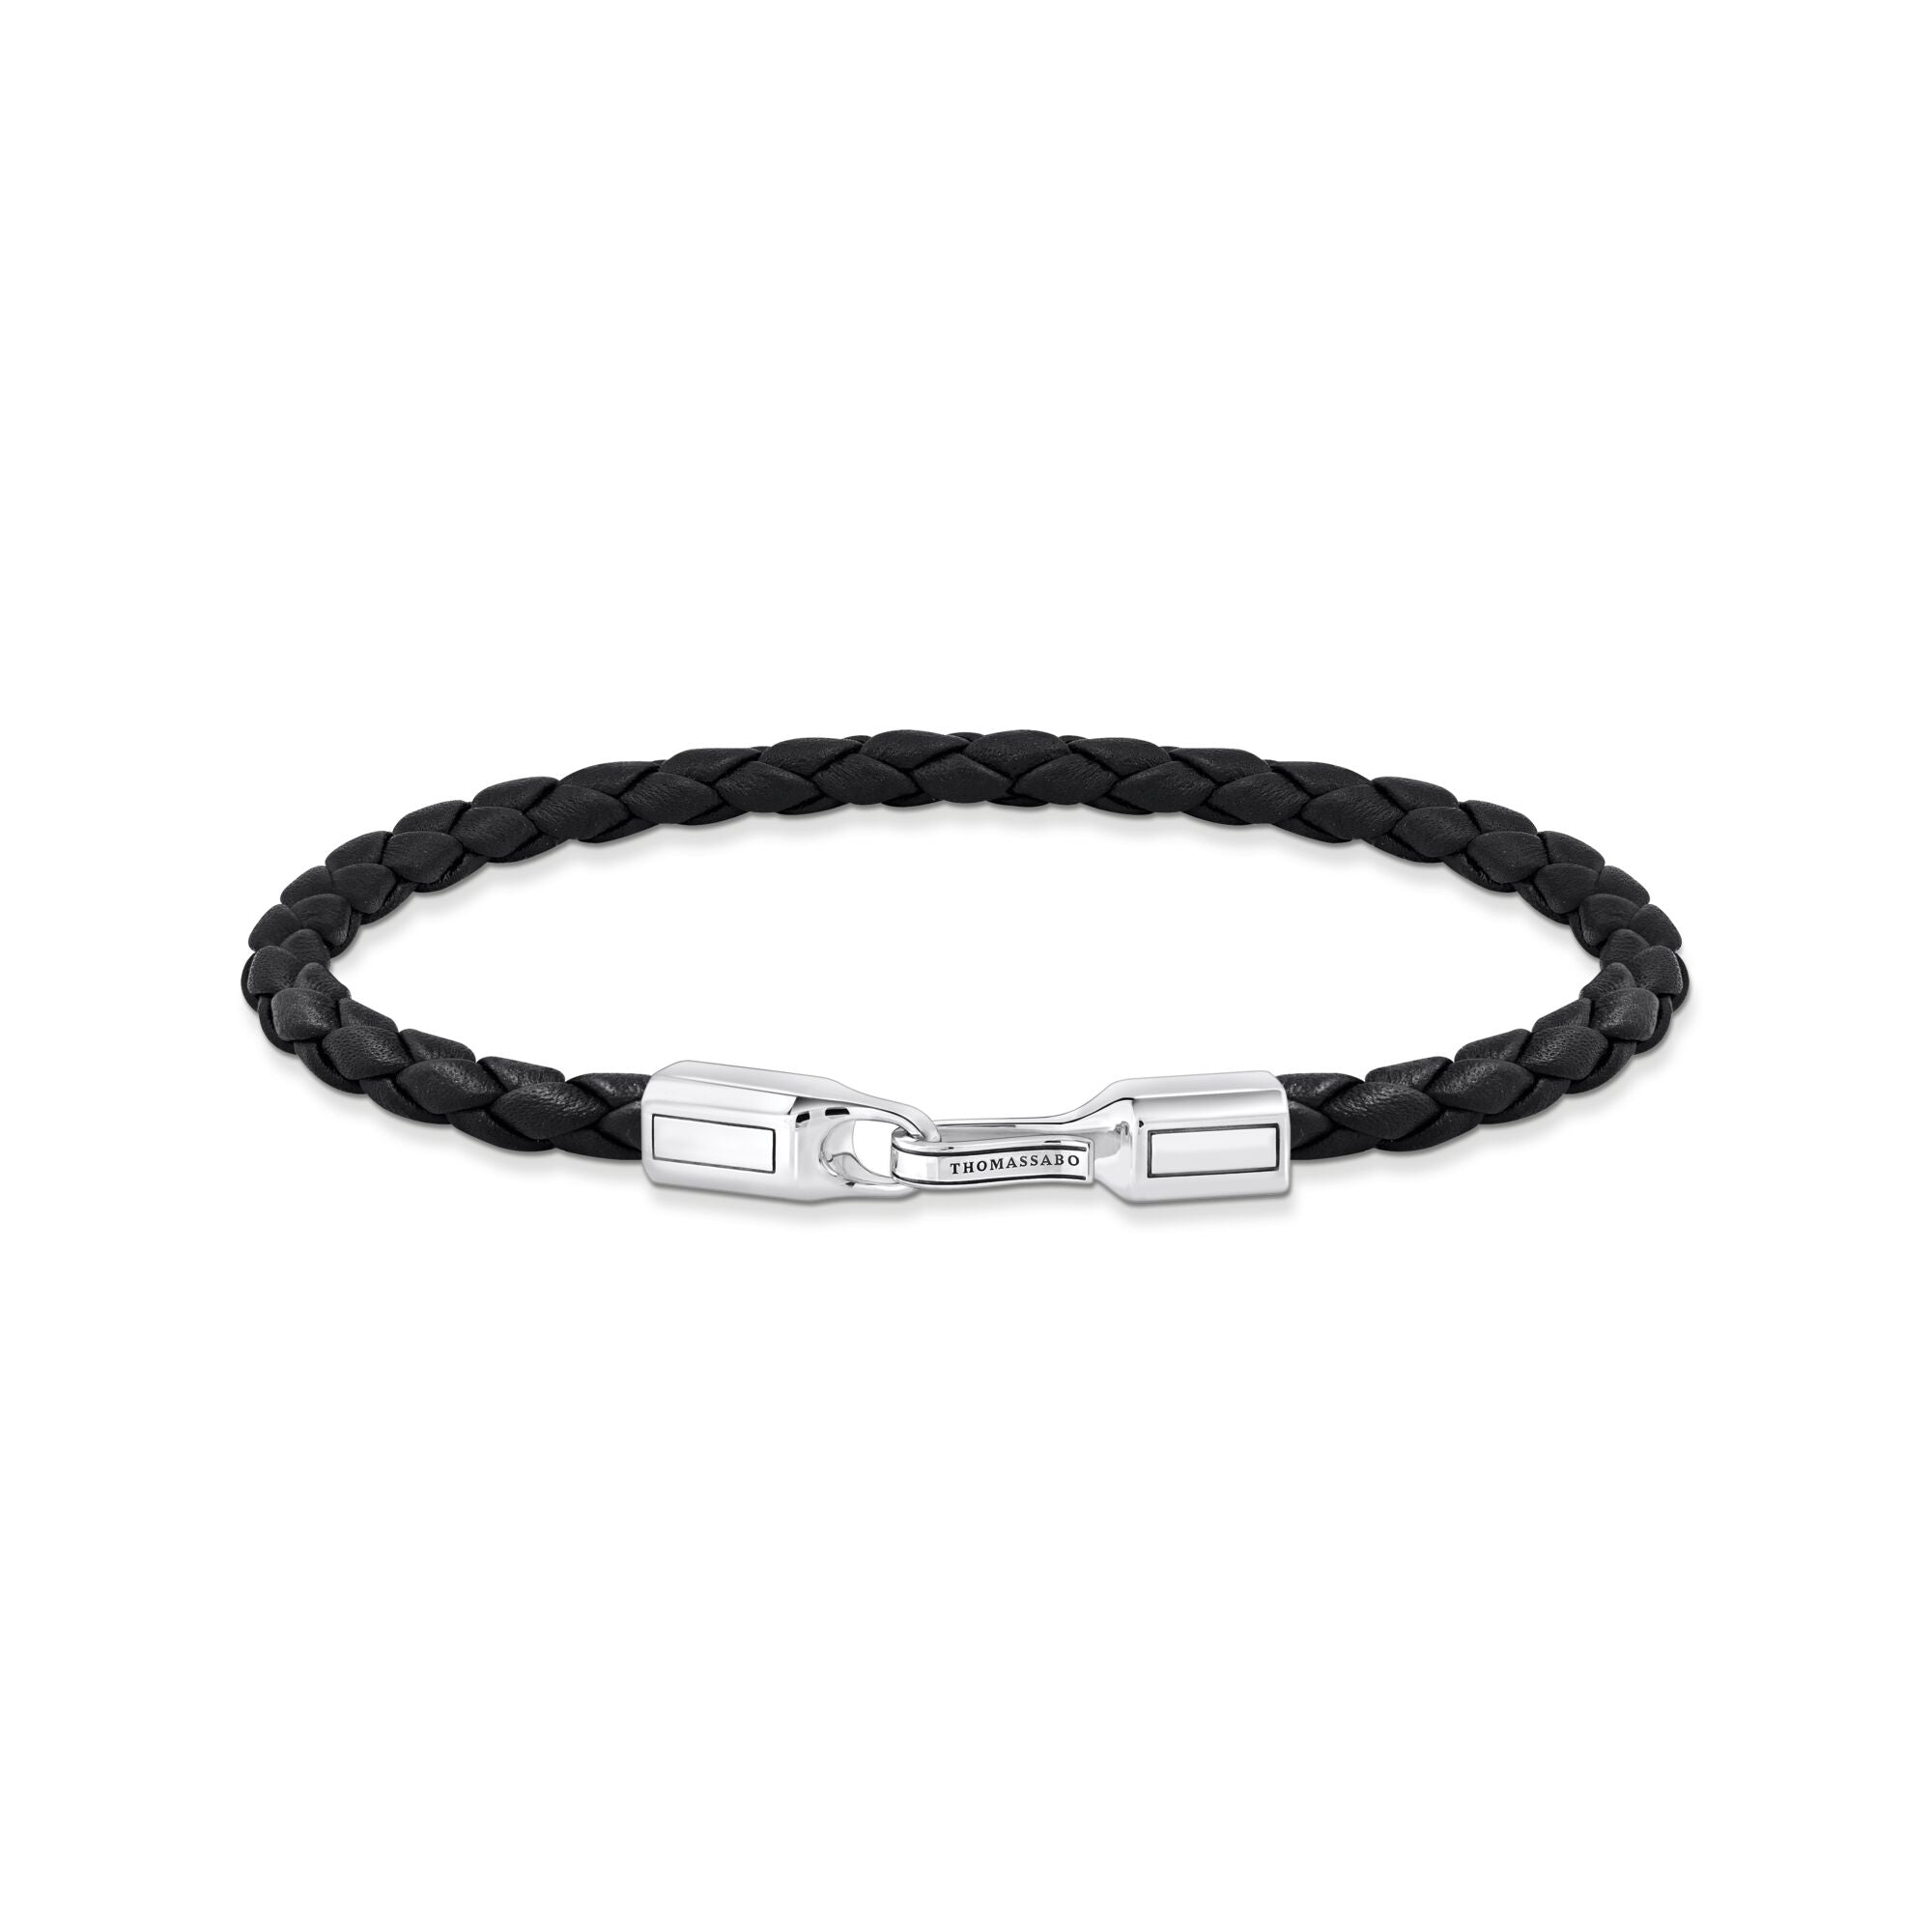 Buy Bracelet with braided, black leather by Thomas Sabo online - THOMAS ...